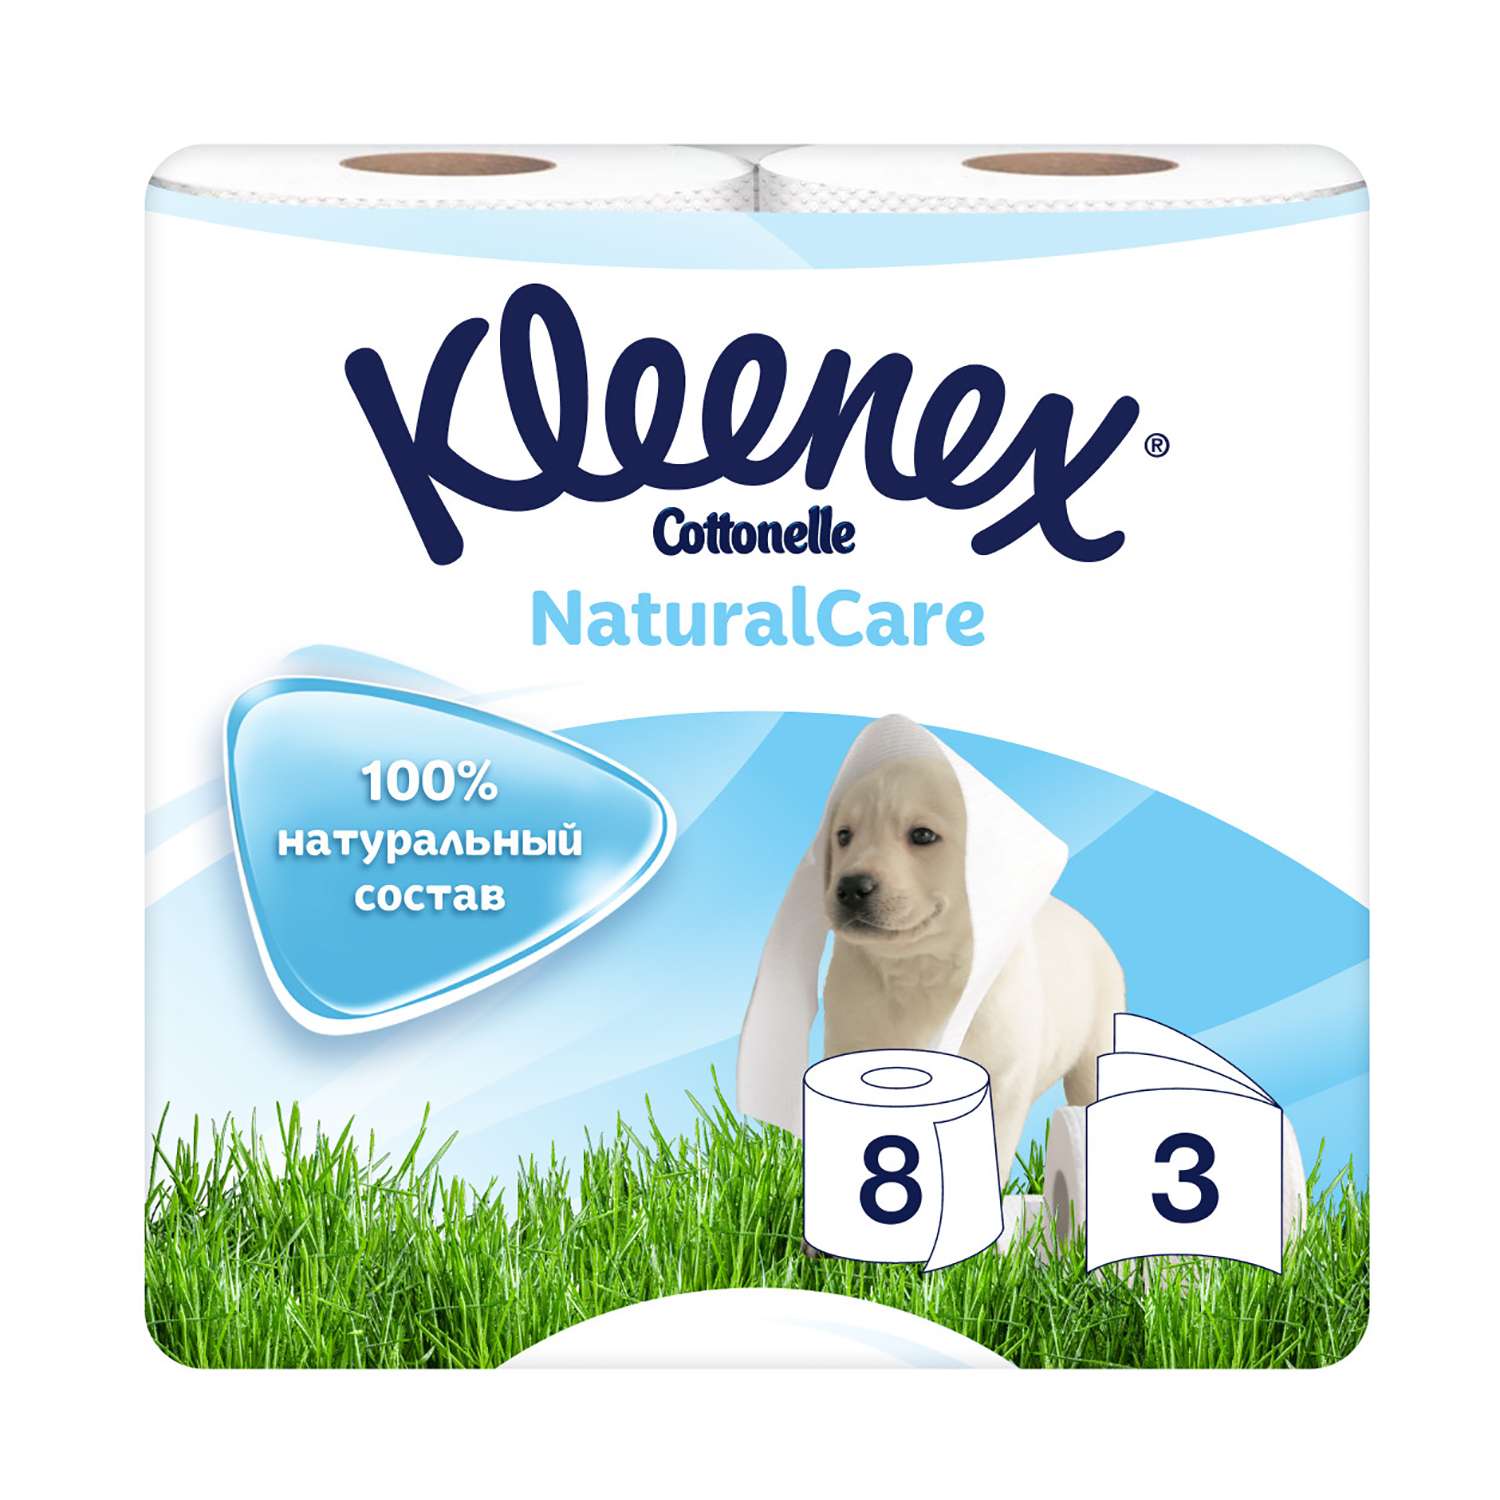 Туалетная бумага Kleenex белая Натурал Кэйр 3слоя 8рулонов - фото 1